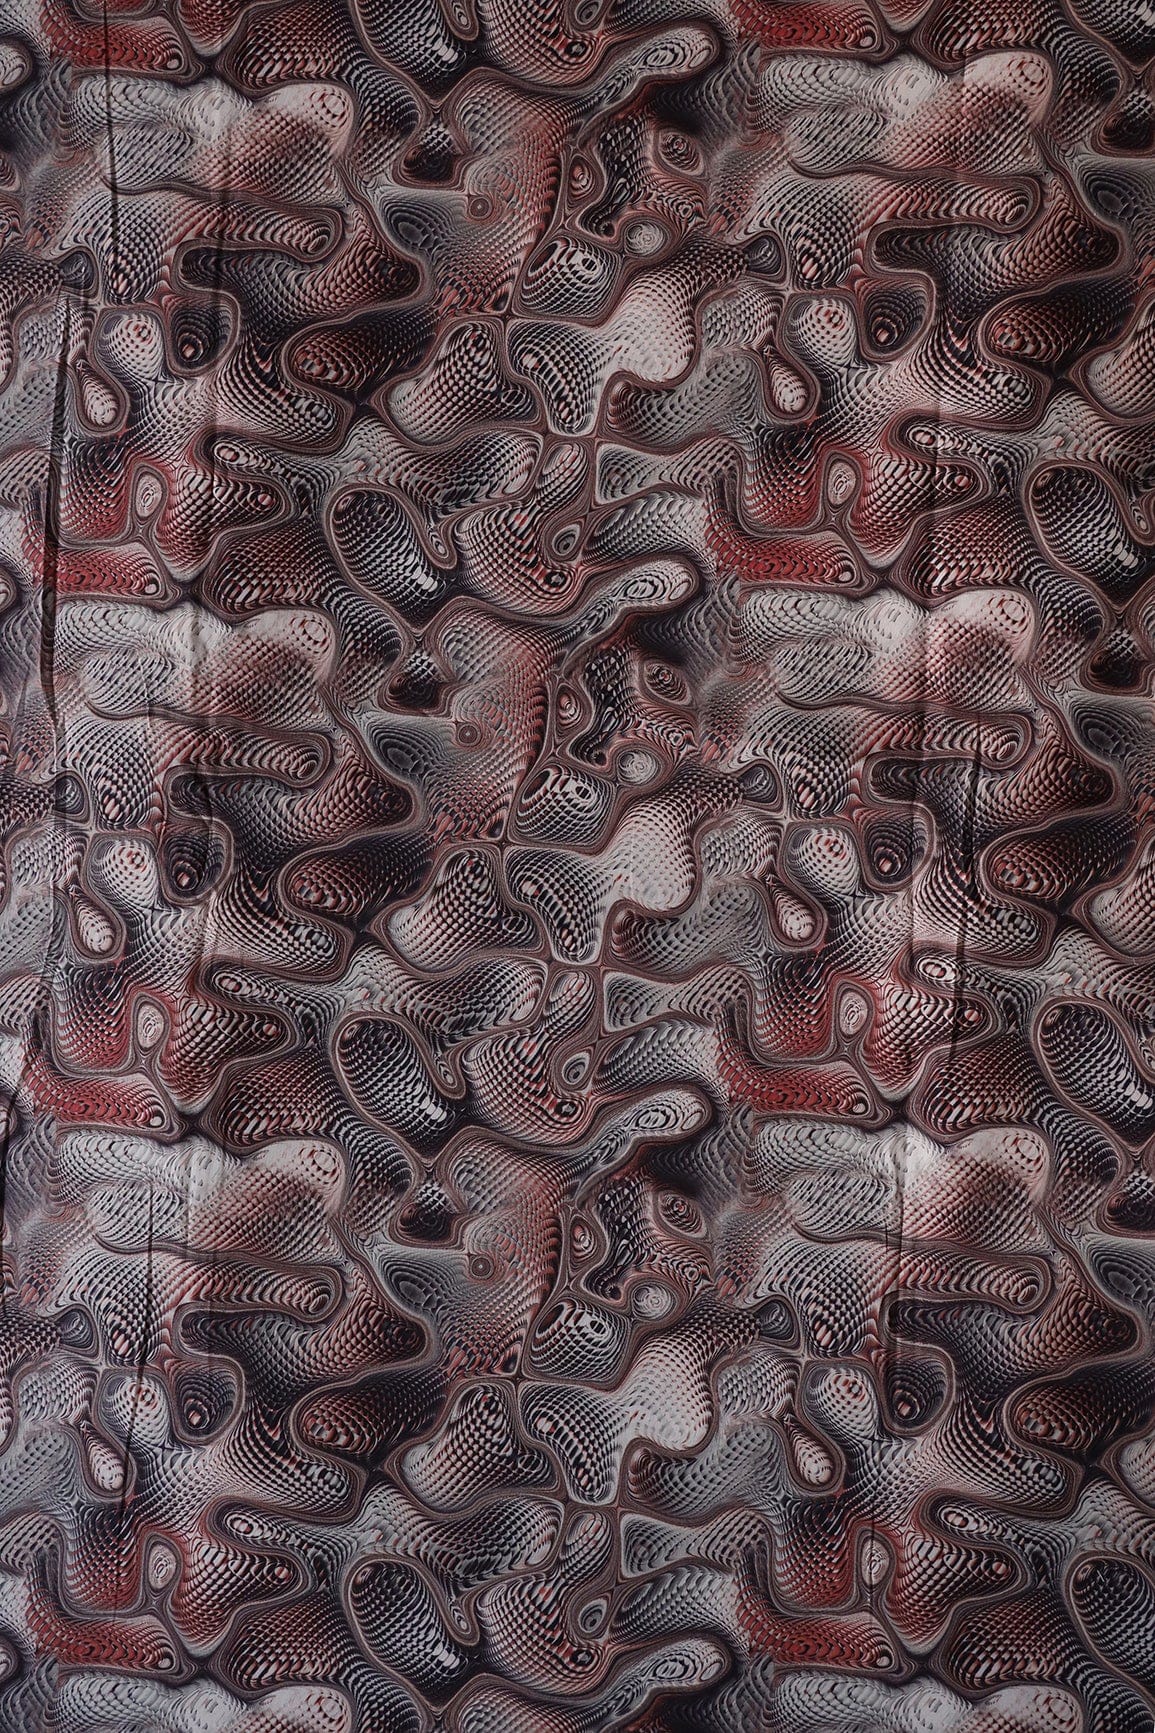 doeraa Prints Multi Color Abstract Pattern Digital Print On Cotton Muslin Fabric